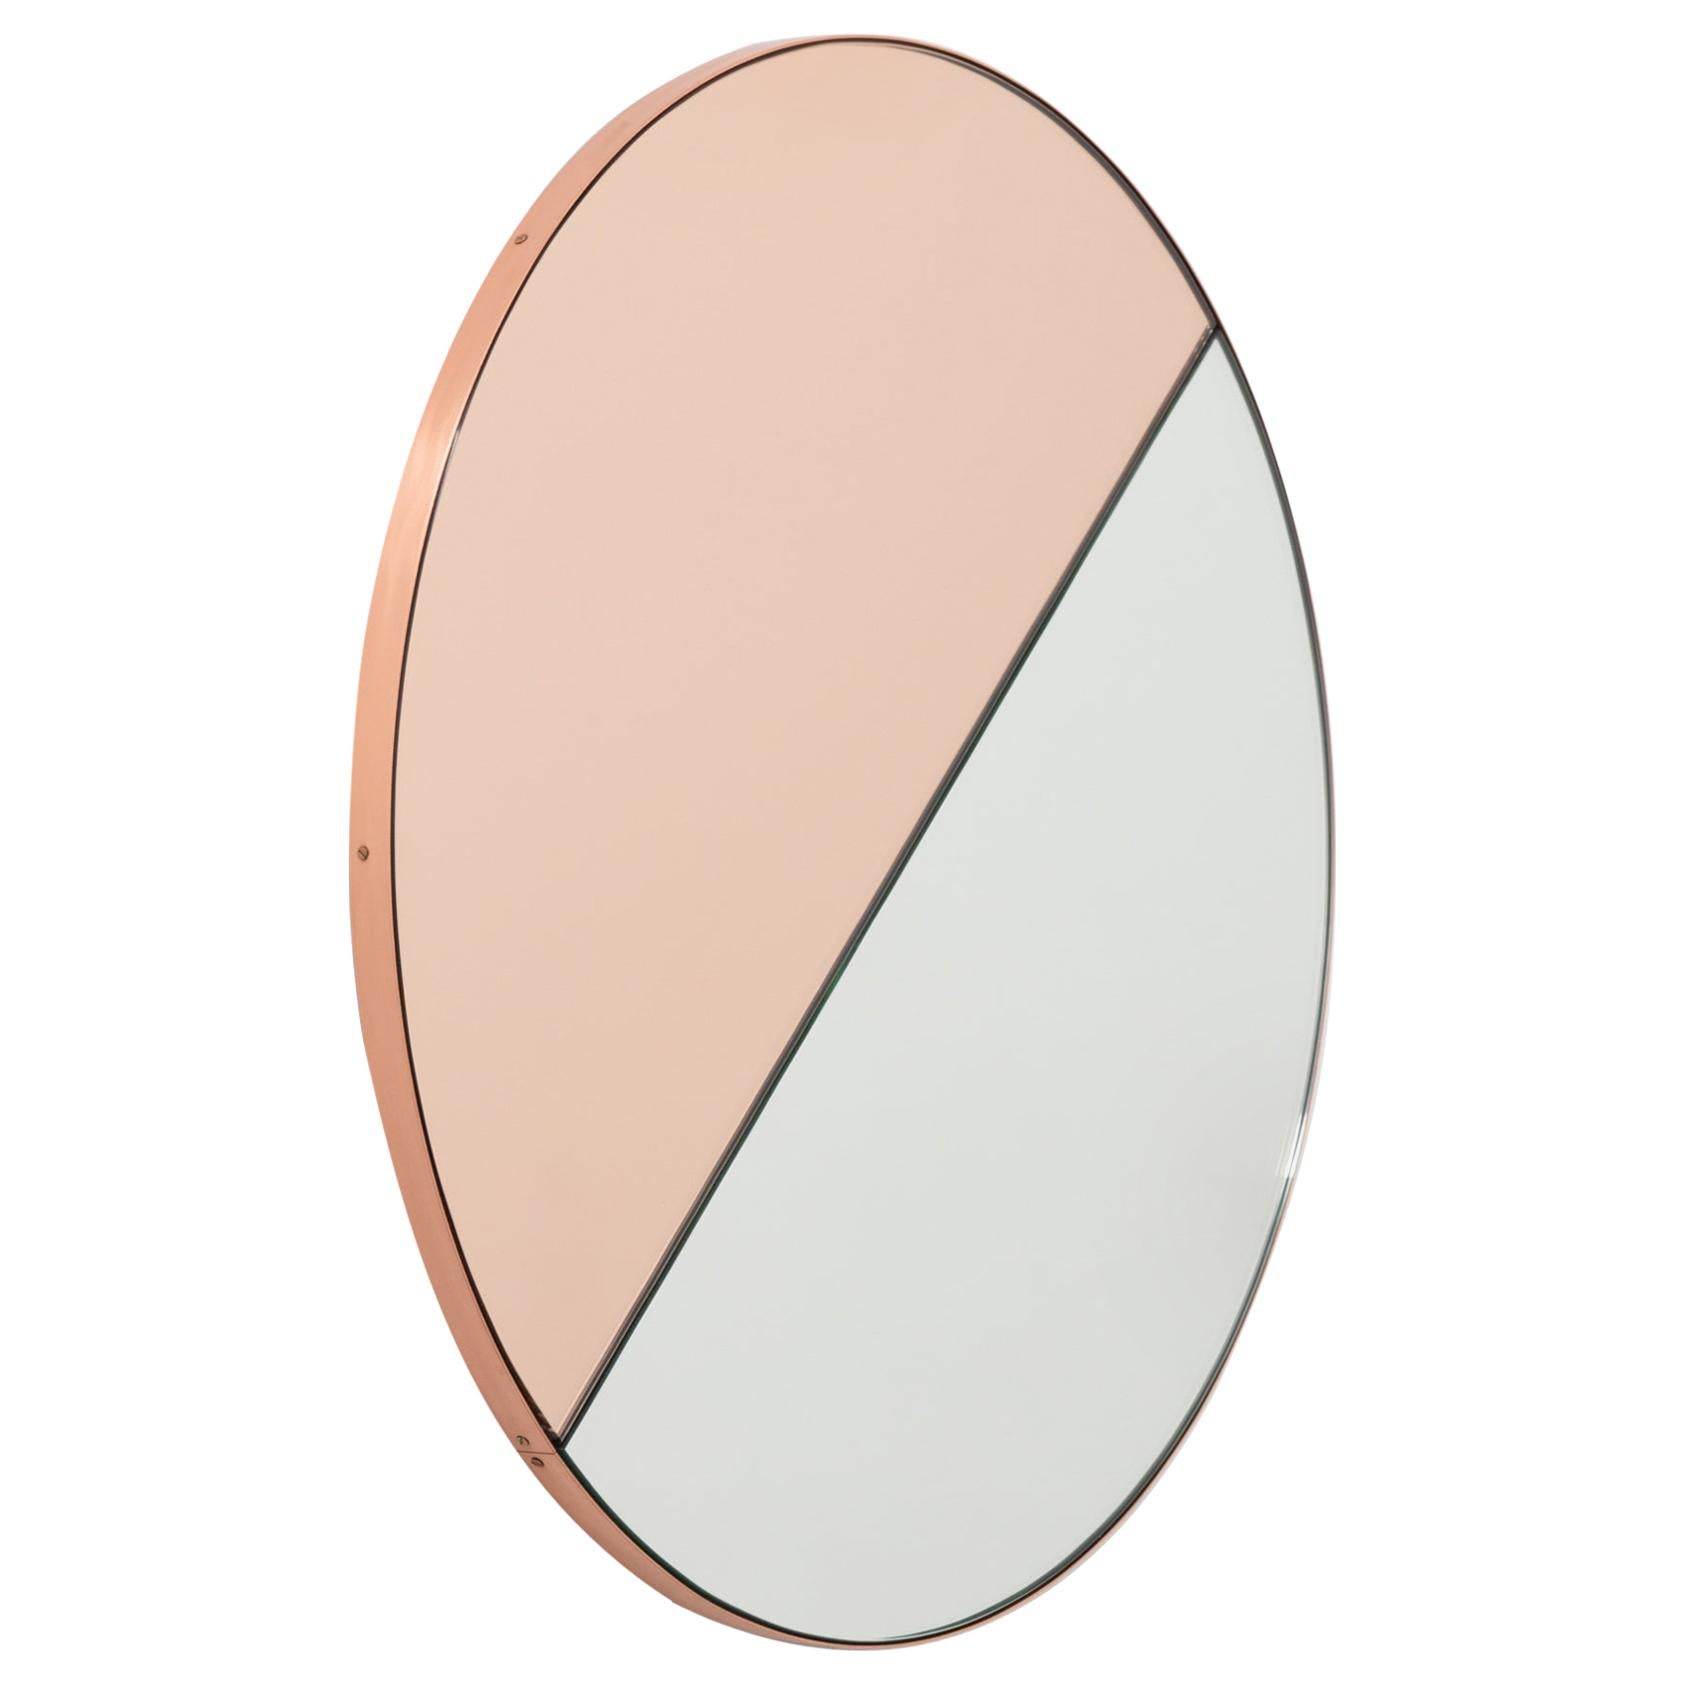 Orbis Dualis Mixed Rose Gold Tint Minimalist Round Mirror, Copper Frame, Regular